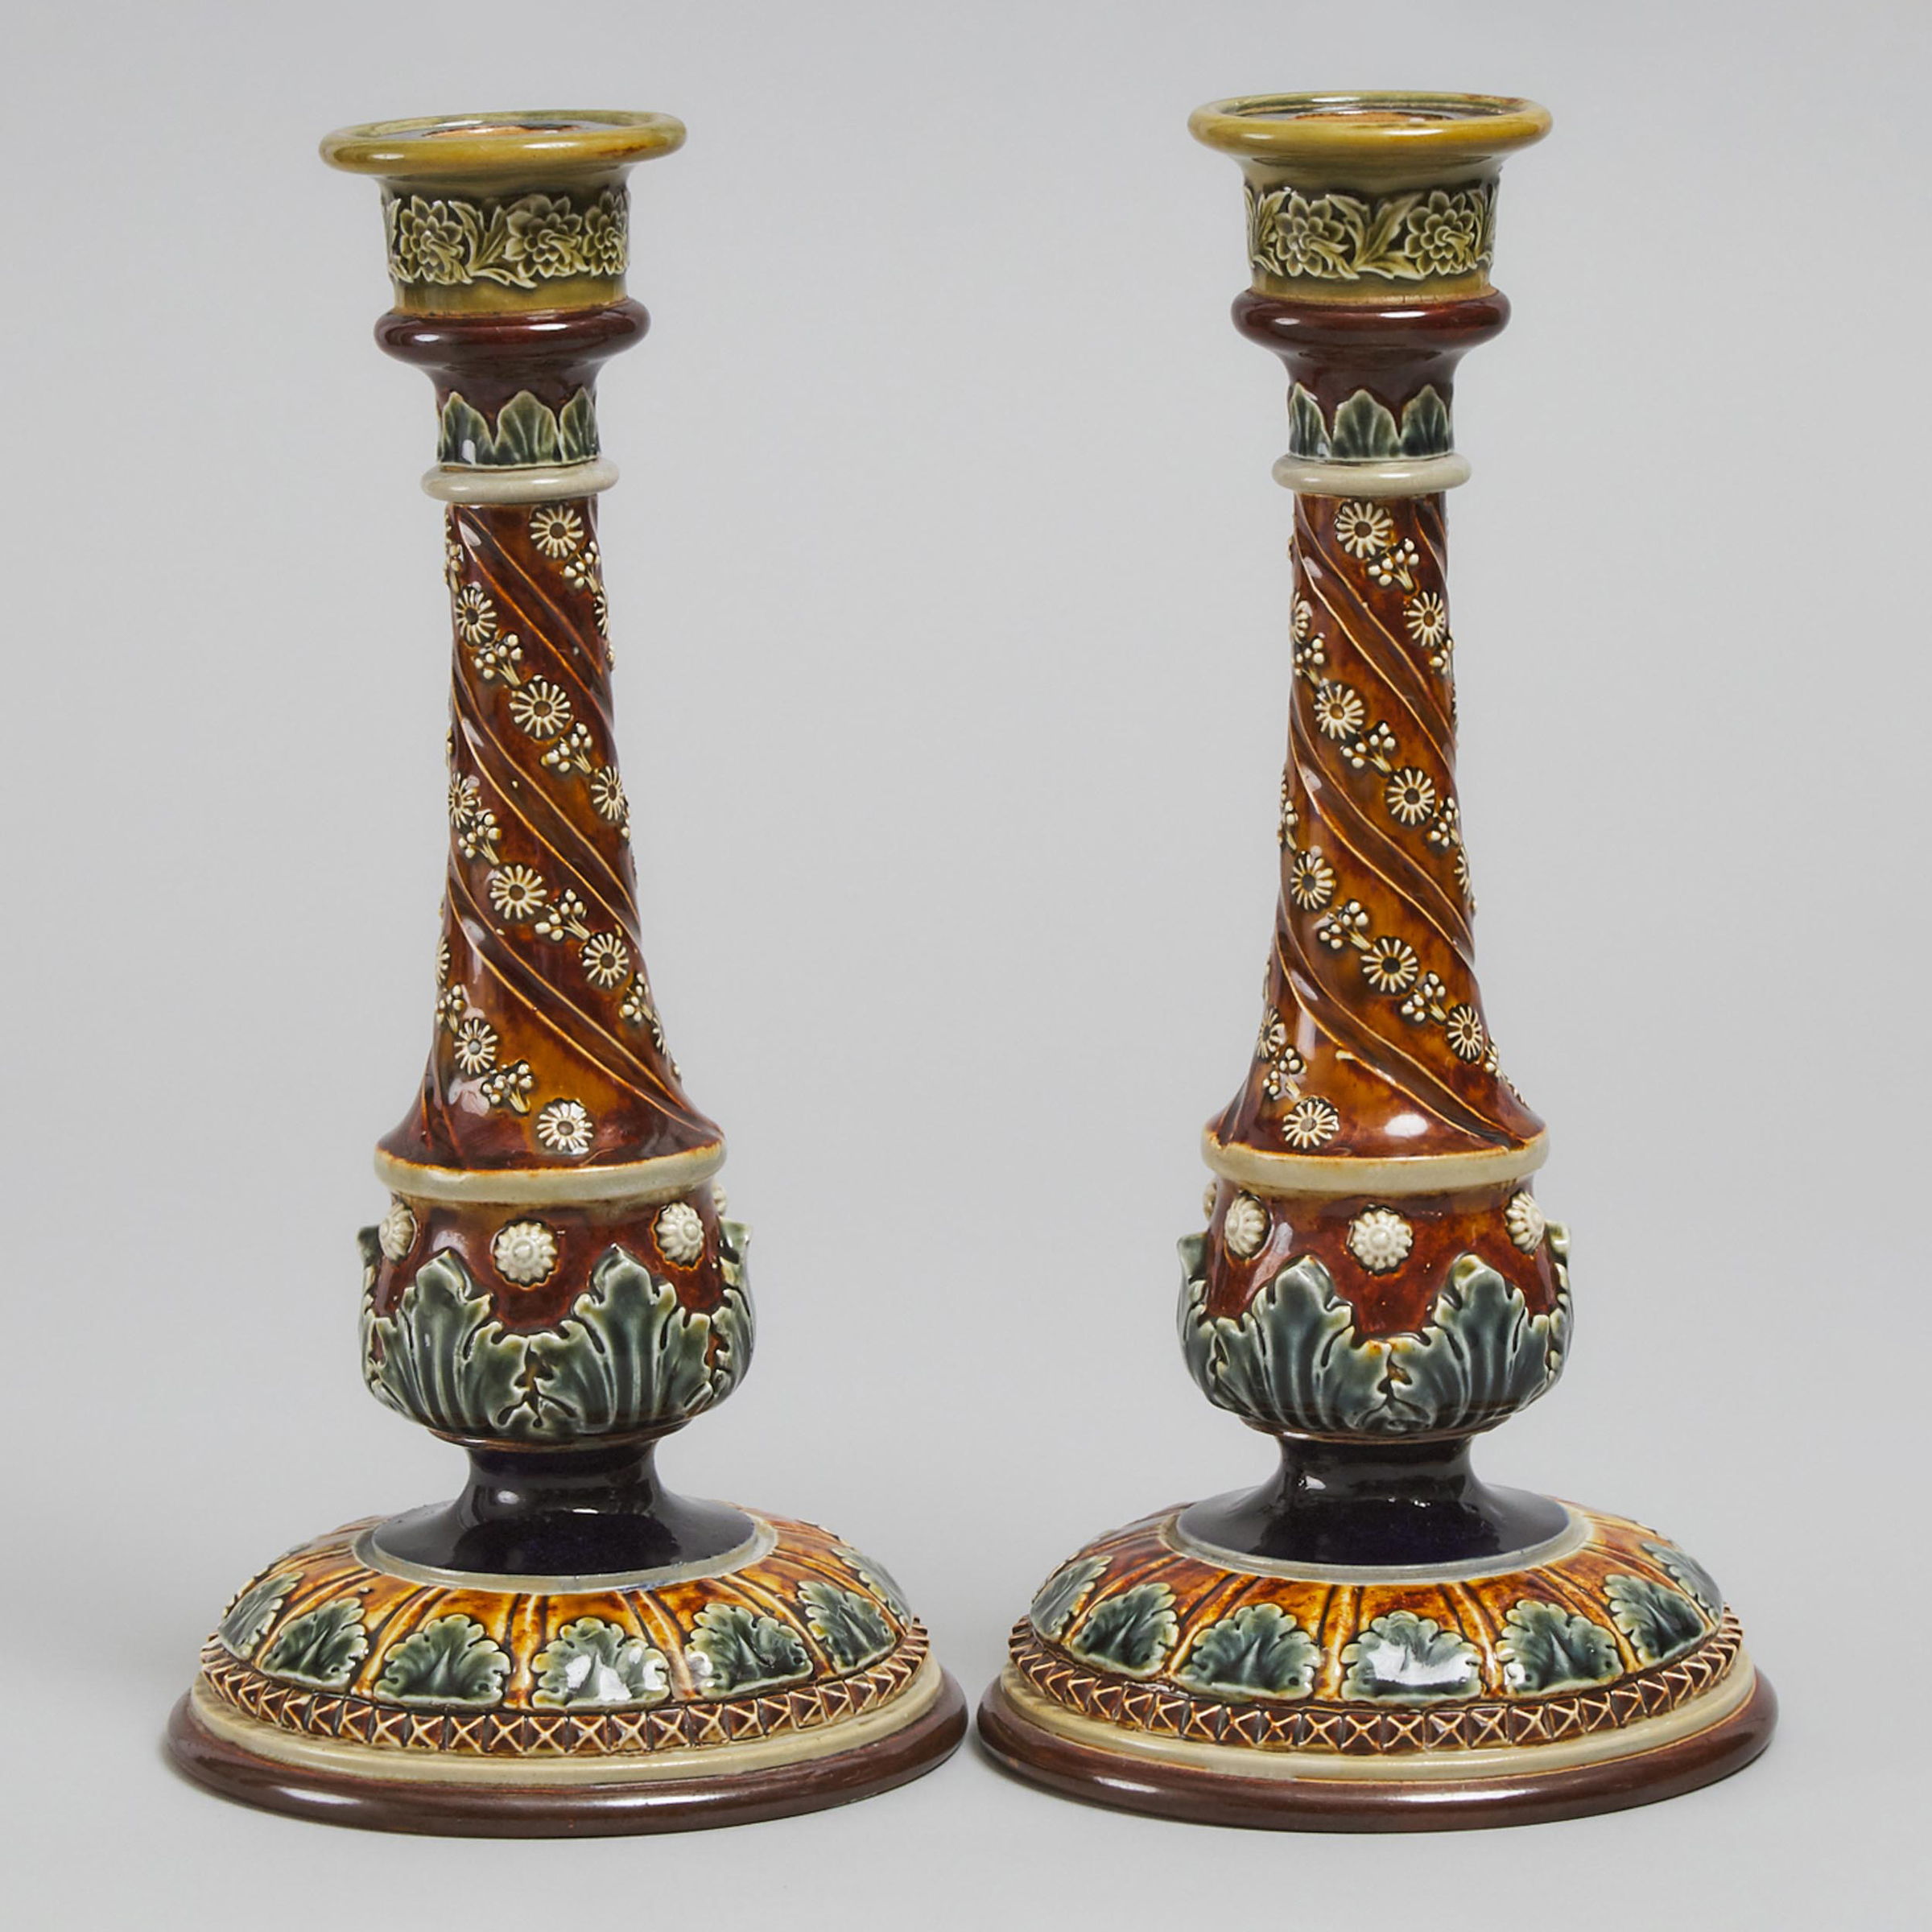 Pair of Doulton Lambeth Stoneware Table Candlesticks, Elizabeth Atkins, late 19th century